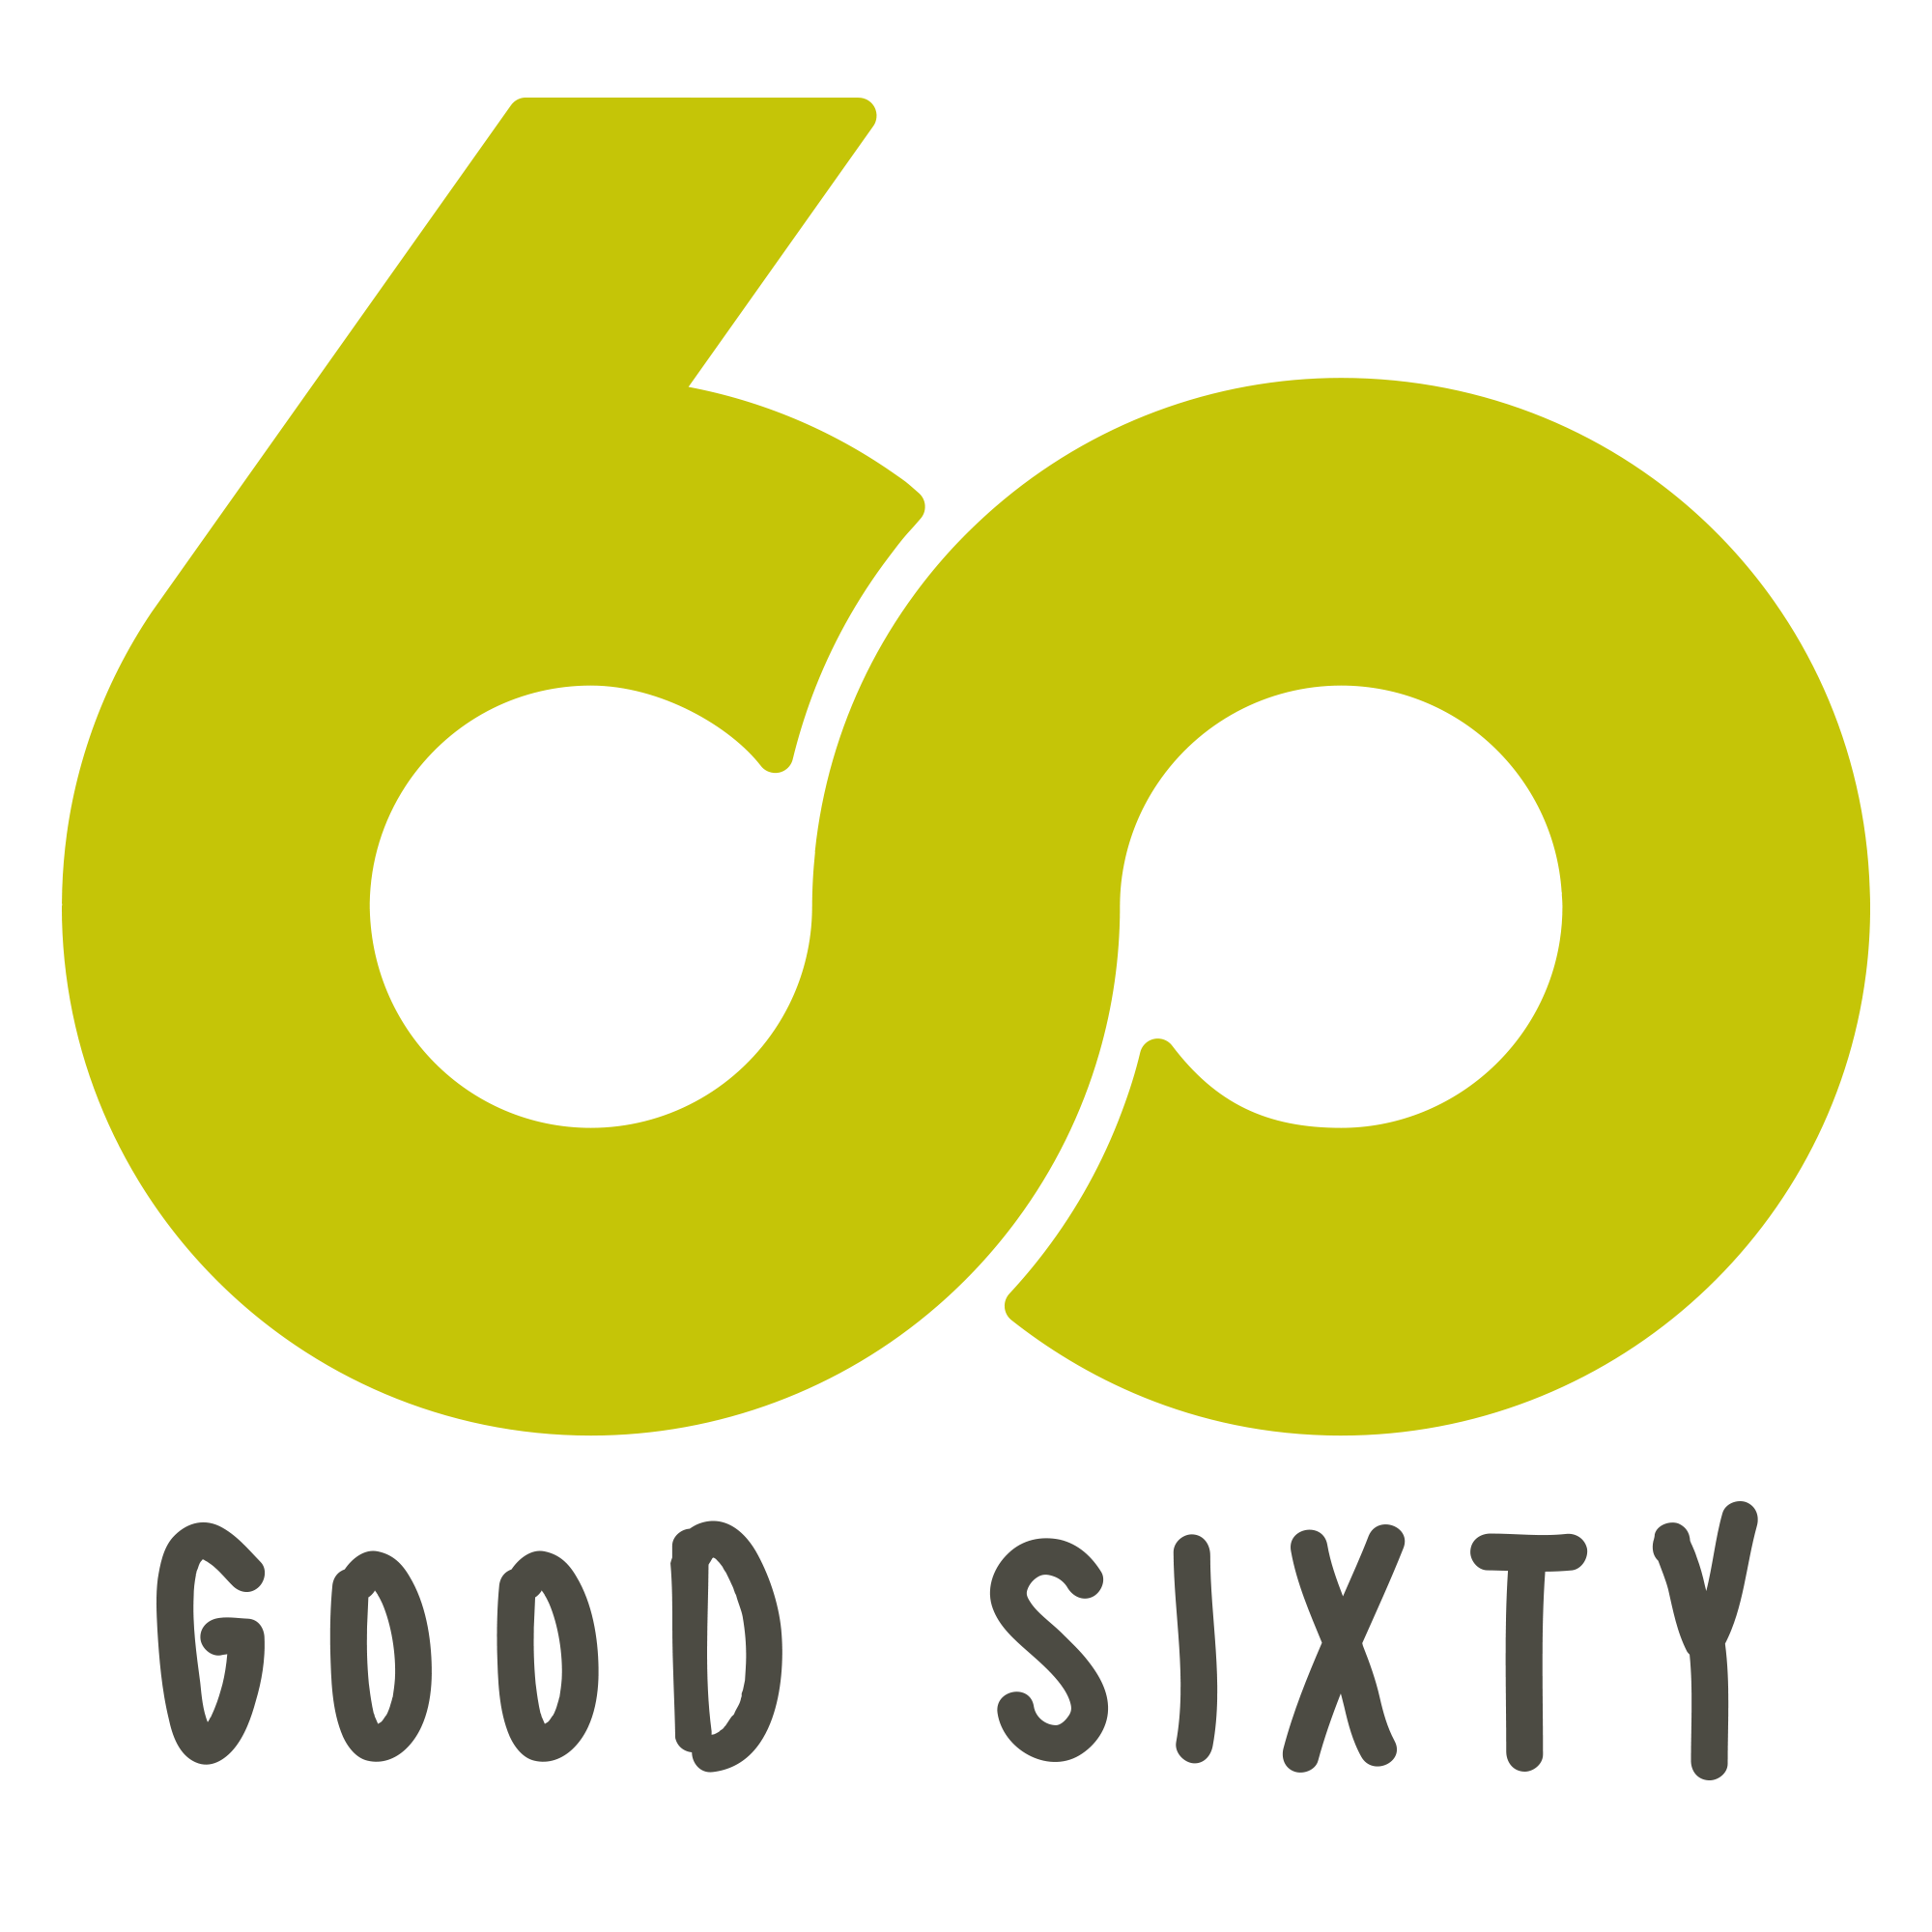 469-goodsixty-logo-16382265985317.png